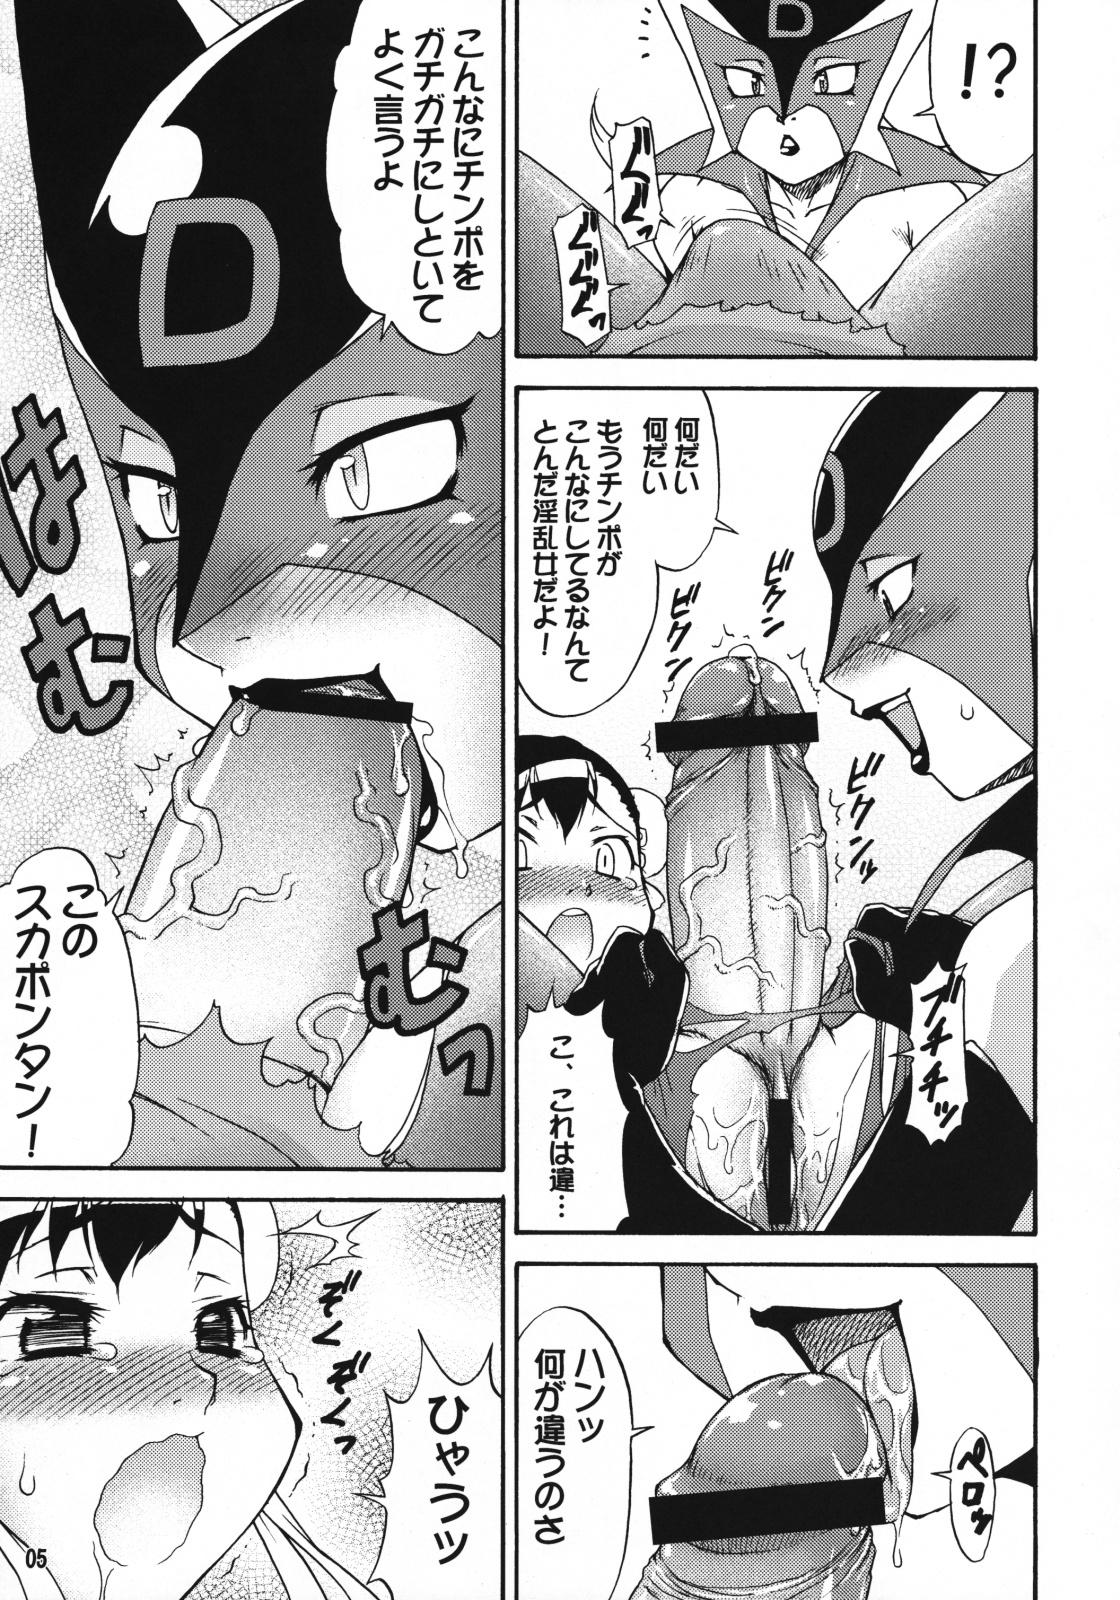 Perra Mikawa Ondo 6 - Street fighter Darkstalkers Princess crown Cyberbots Yatterman Outdoor - Page 4